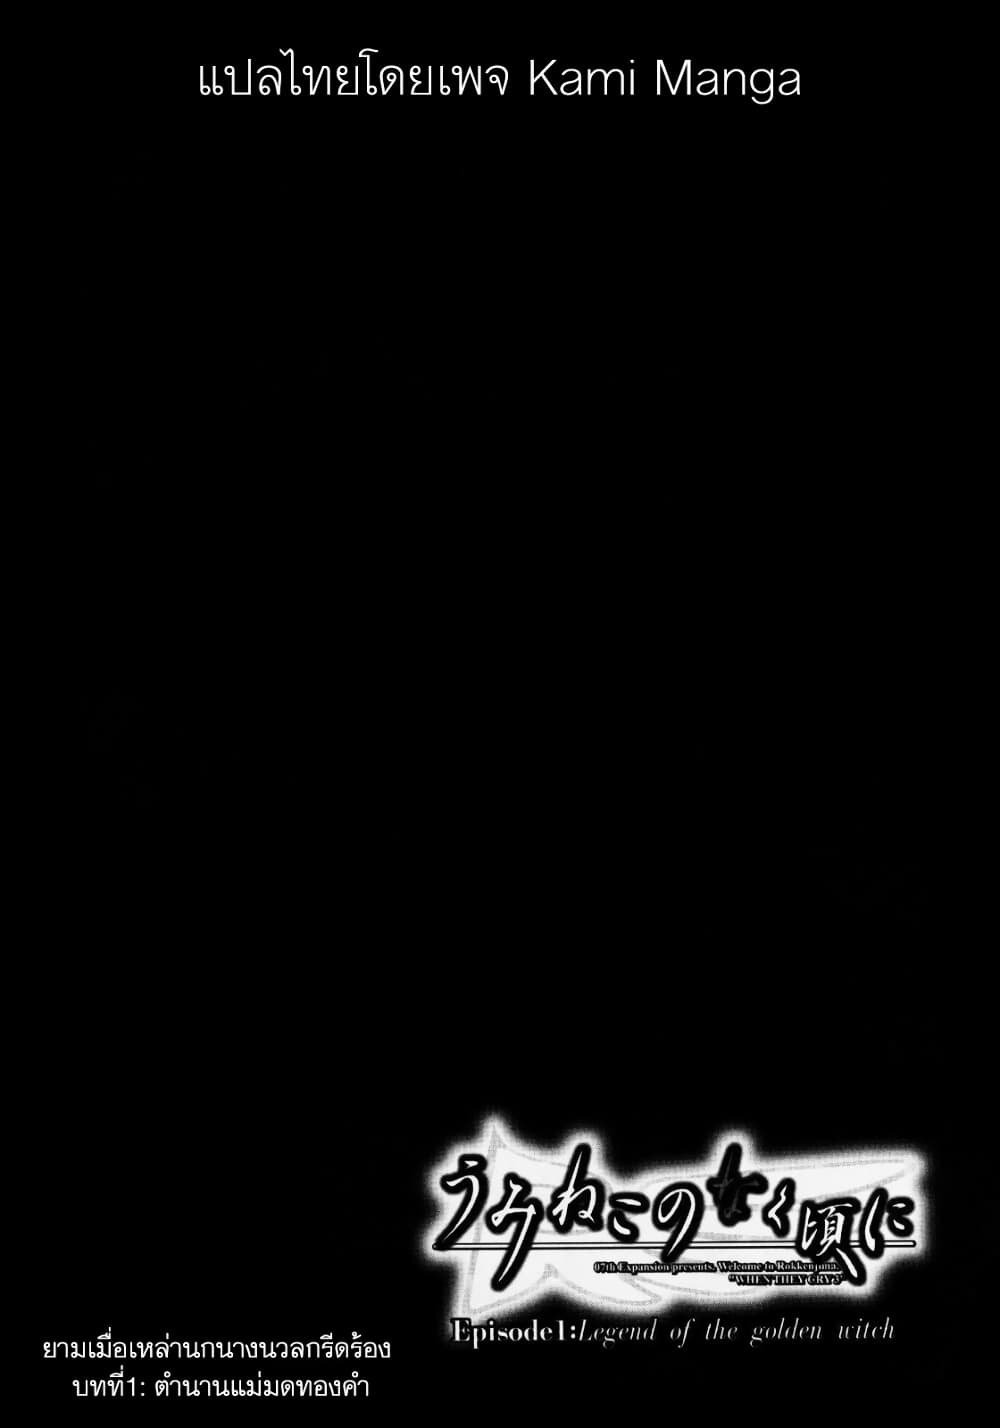 Umineko no Naku Koro ni Episode 1 Legend of the Golden Witch Chapter5 52